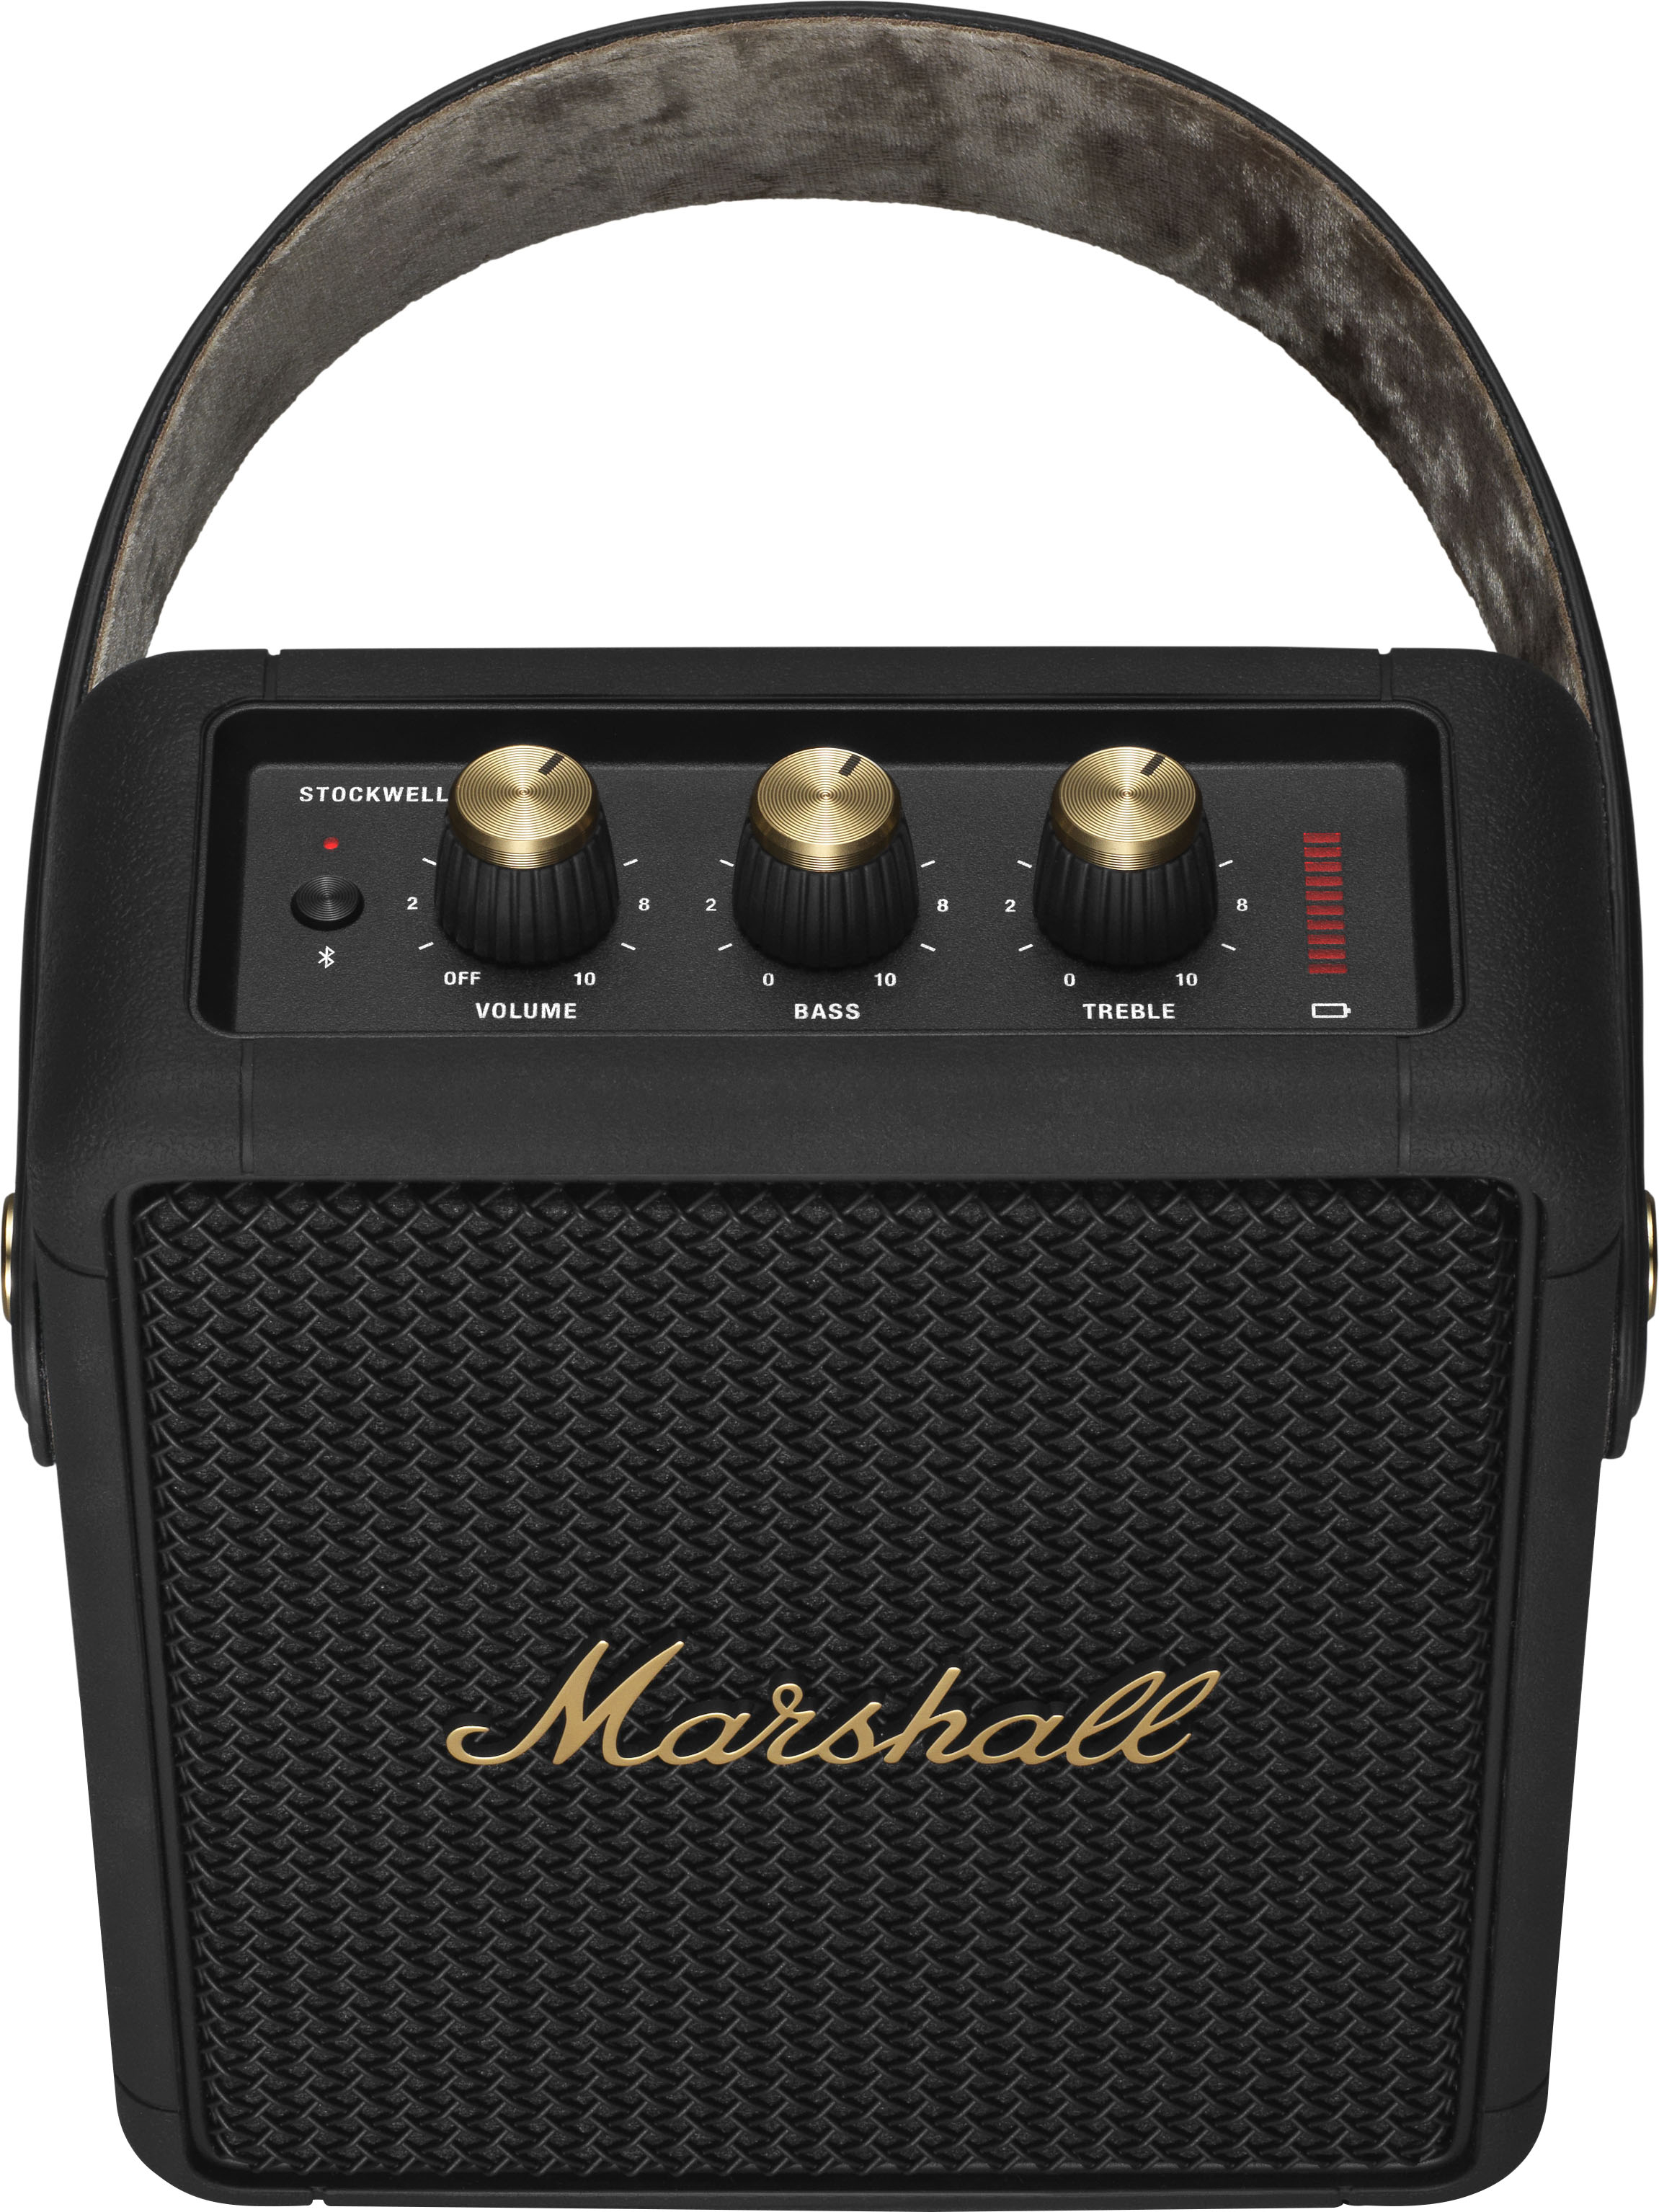 Marshall Stockwell II Portable Bluetooth Speaker Black & Brass